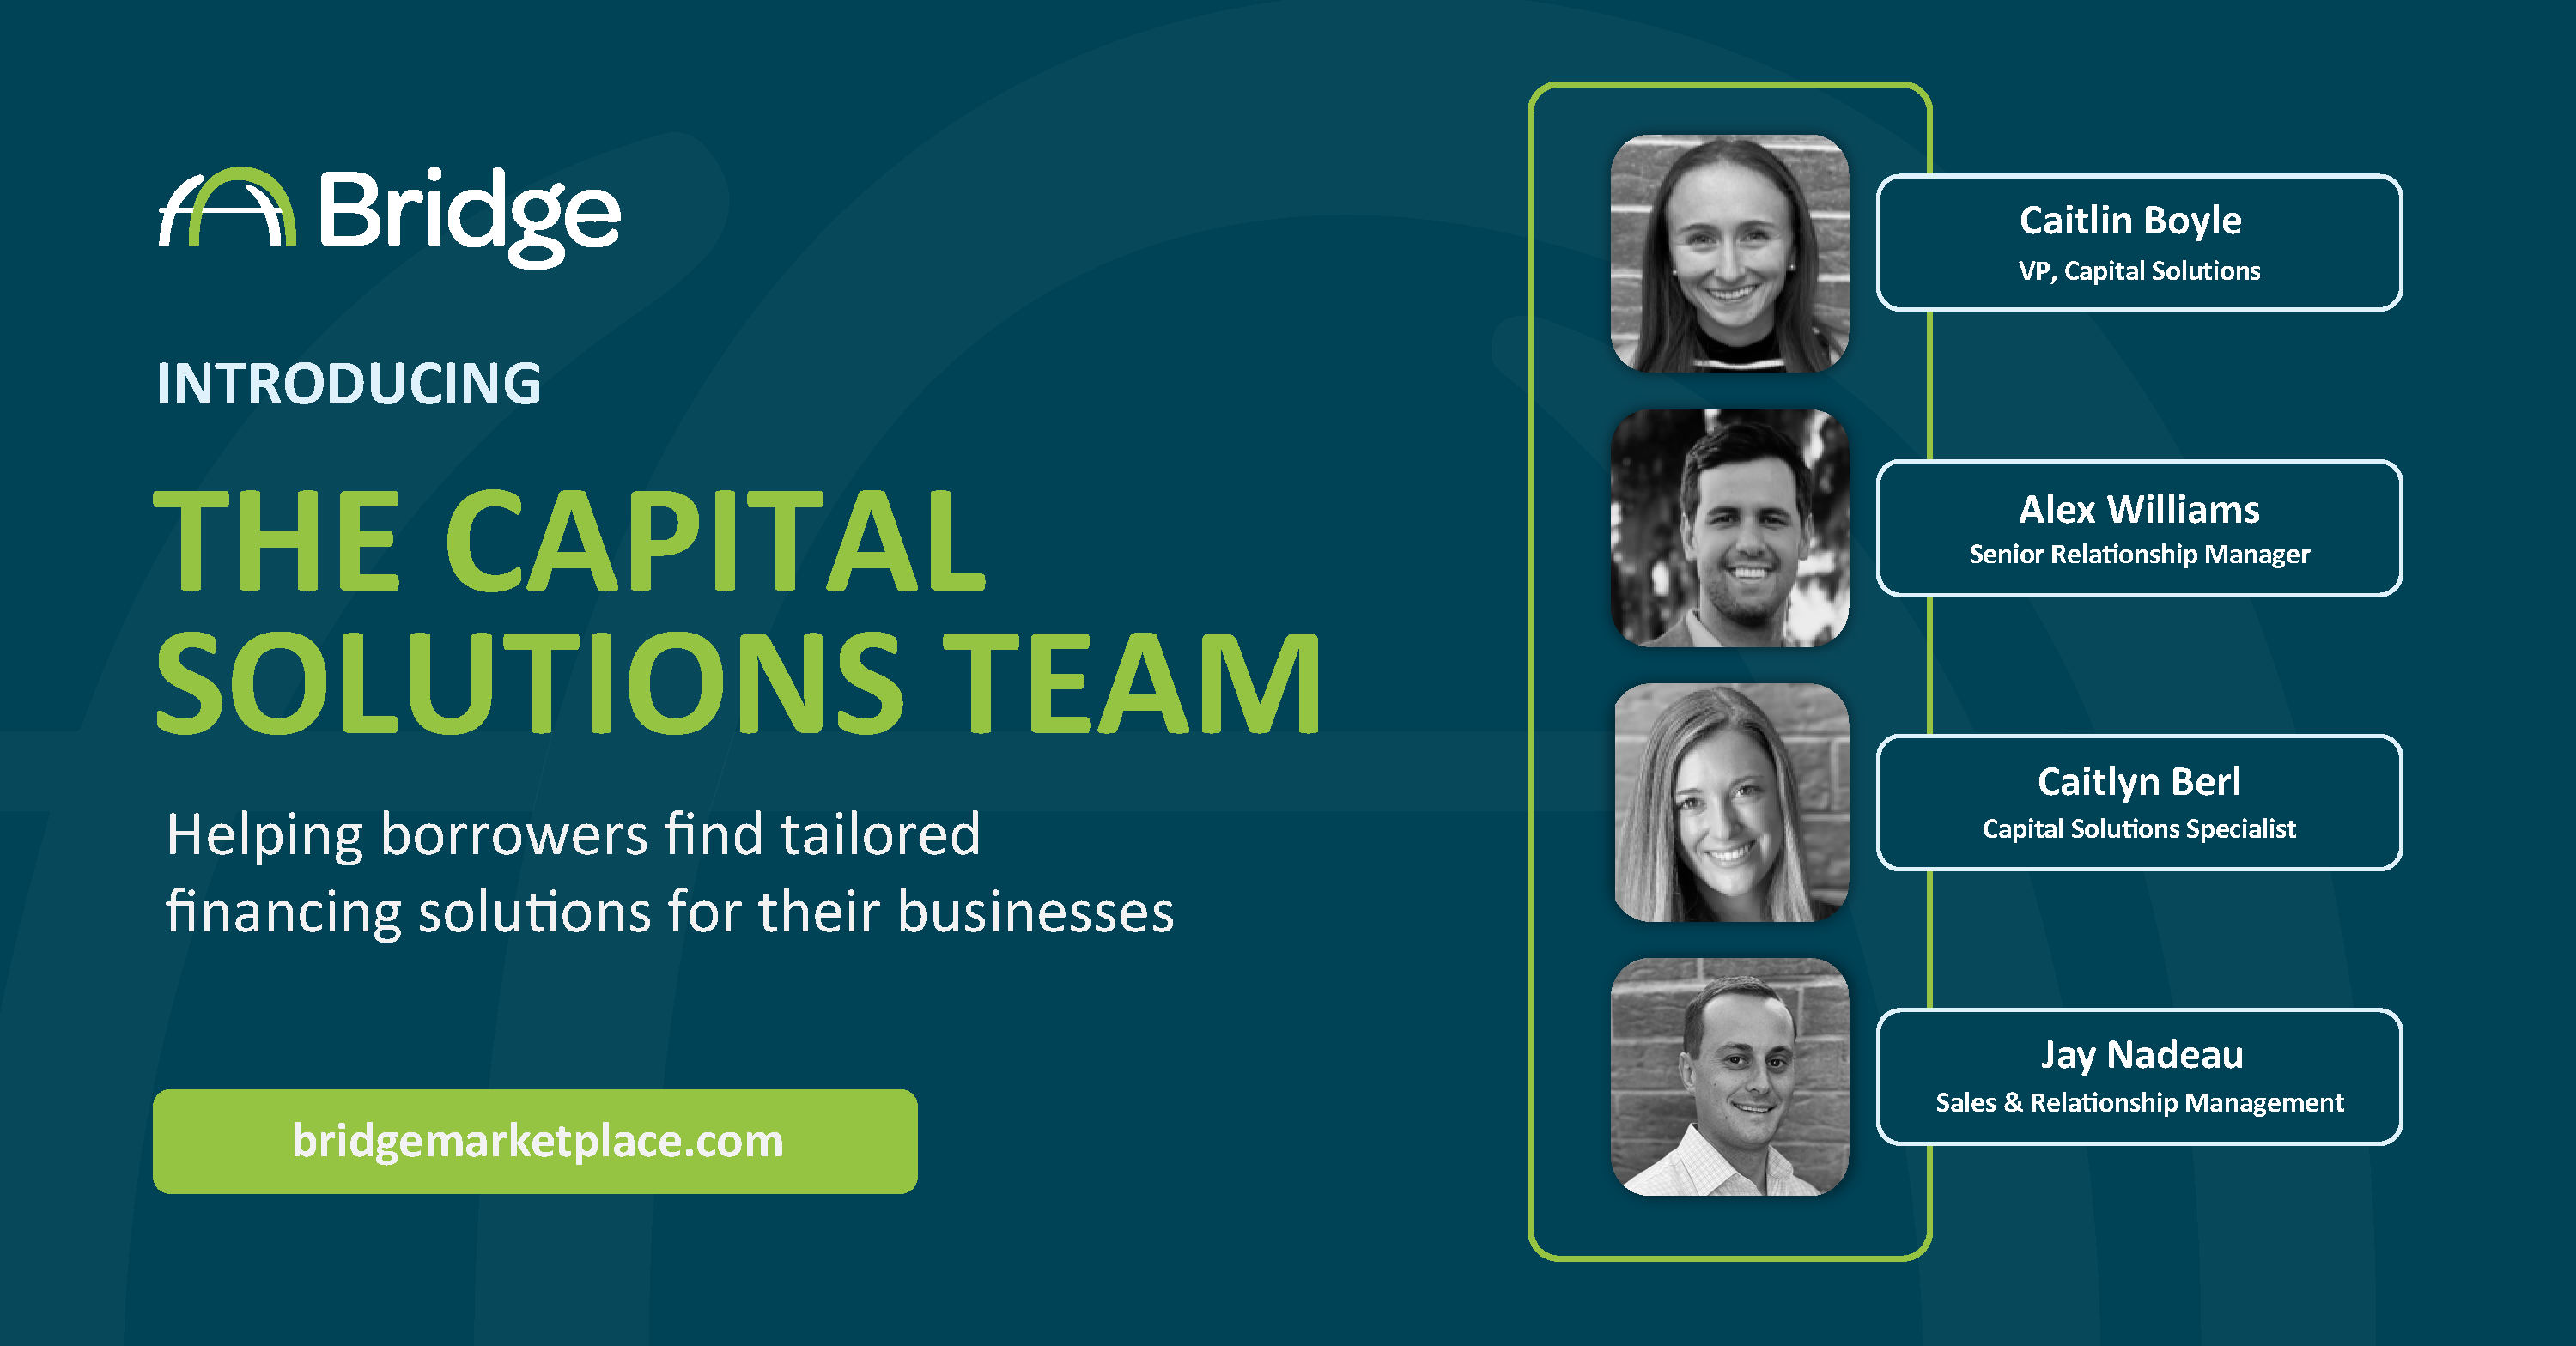 Meet the Capital Solutions Team